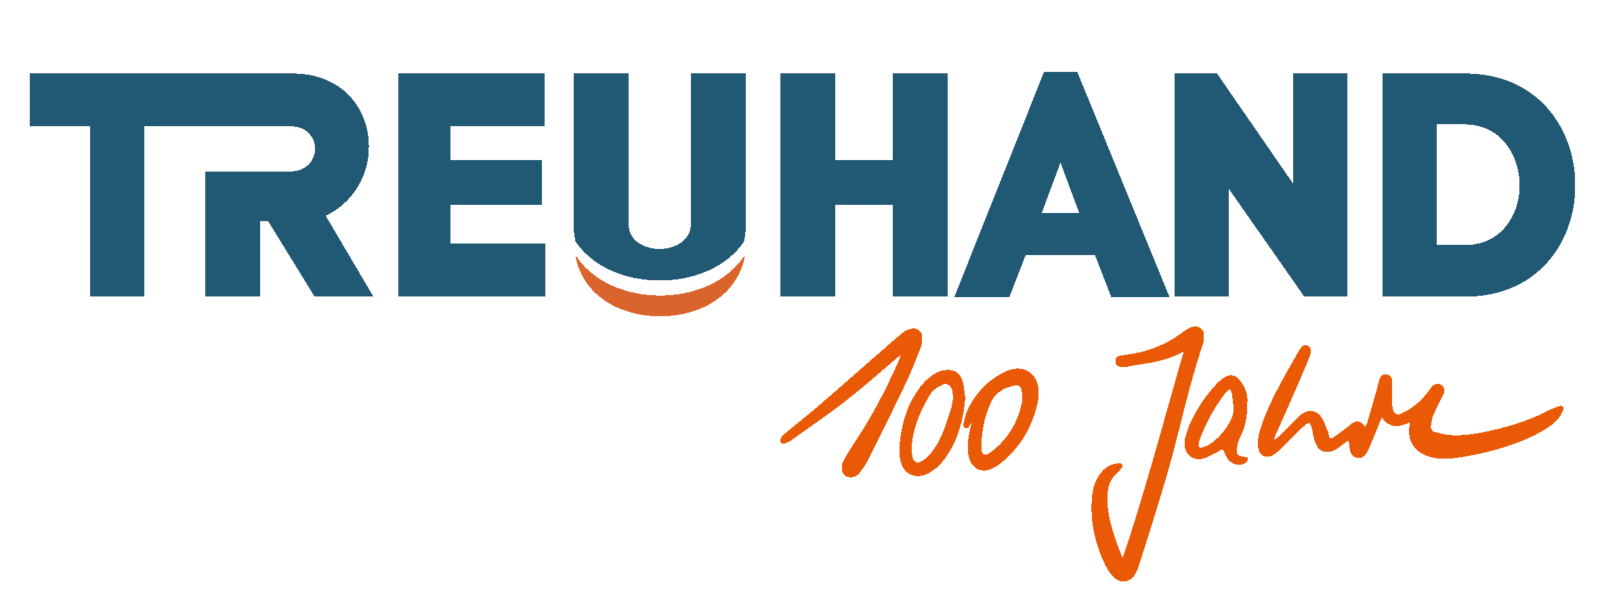 Logo 100 years Treuhand